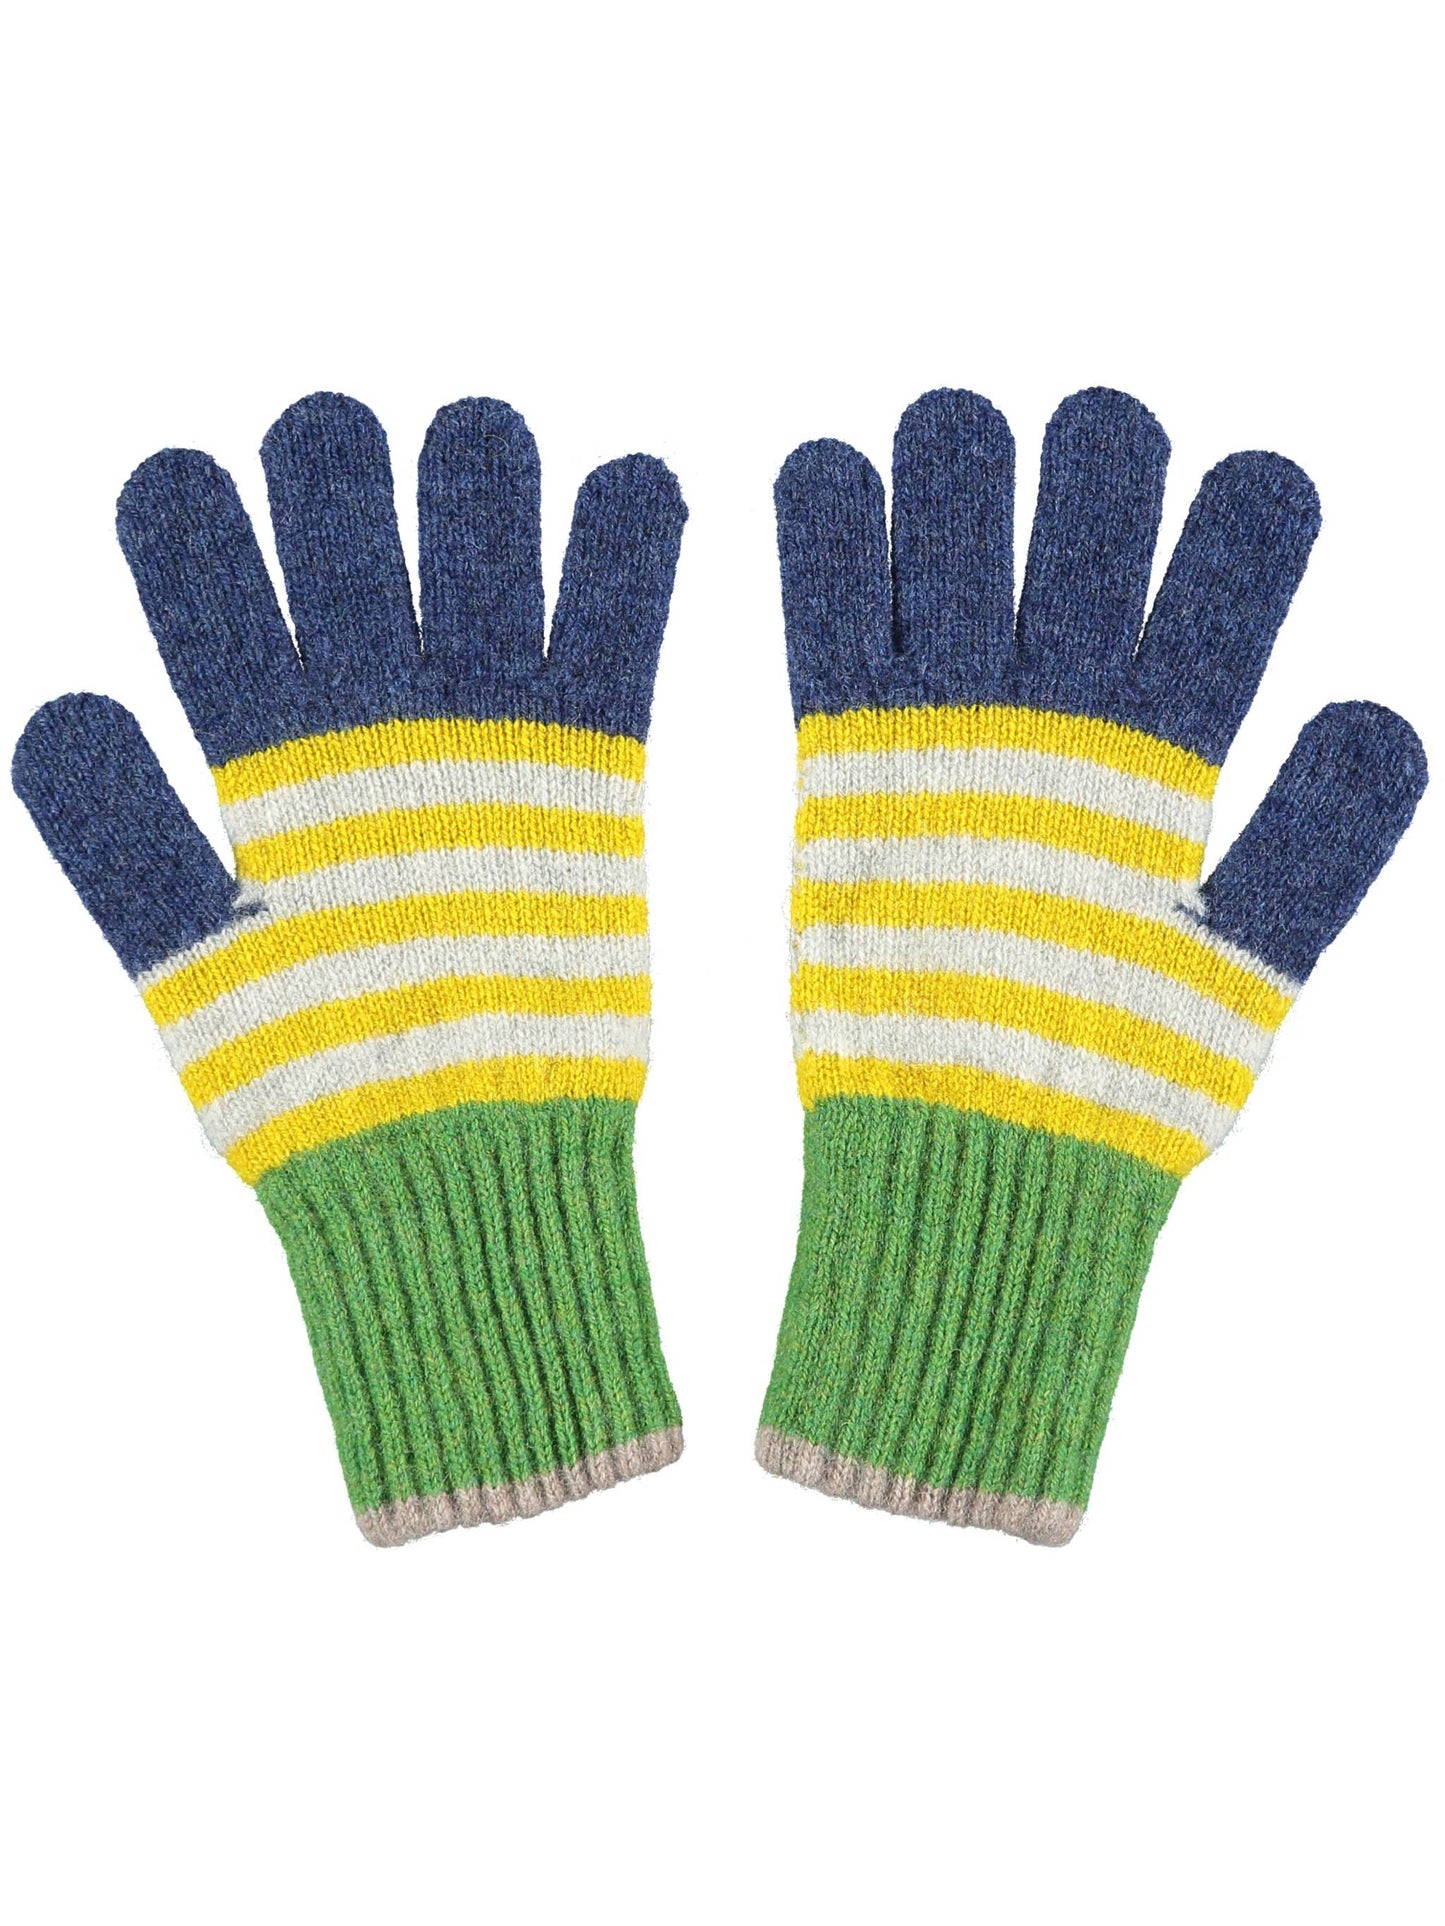 Navy & Yellow Kids Gloves